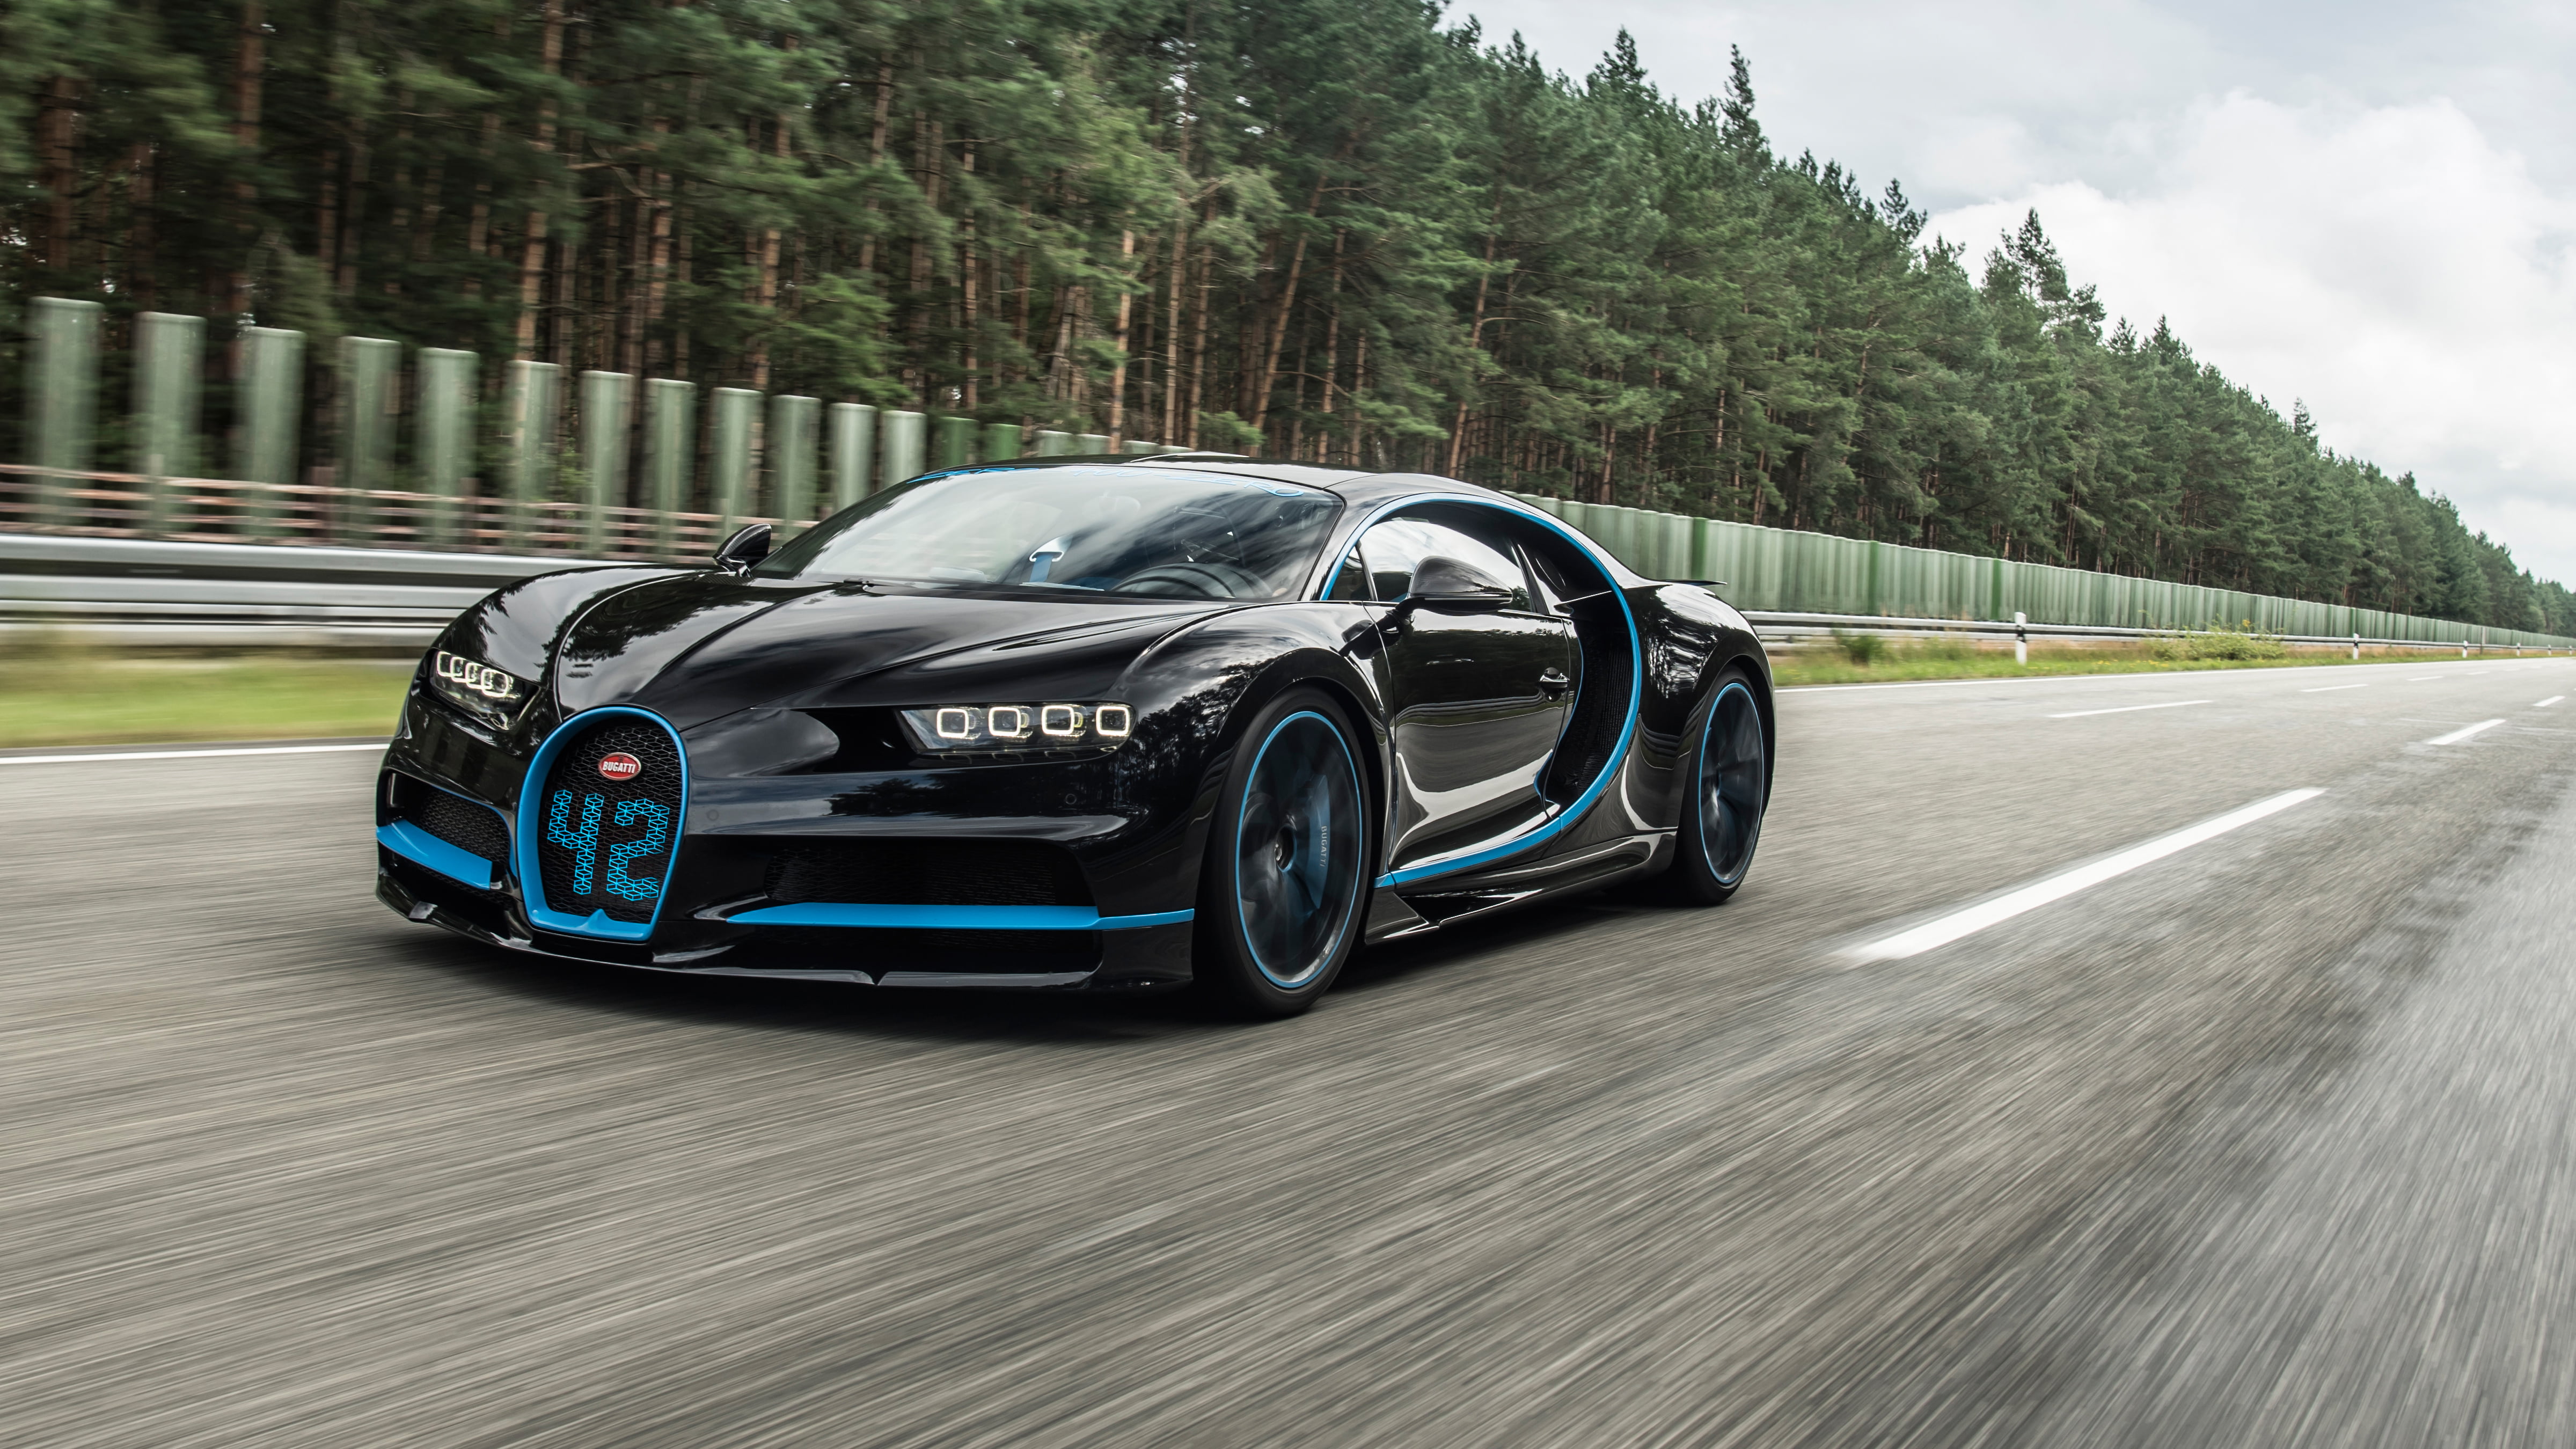 Black Bugatti Veyron running fast on gray concrete road during